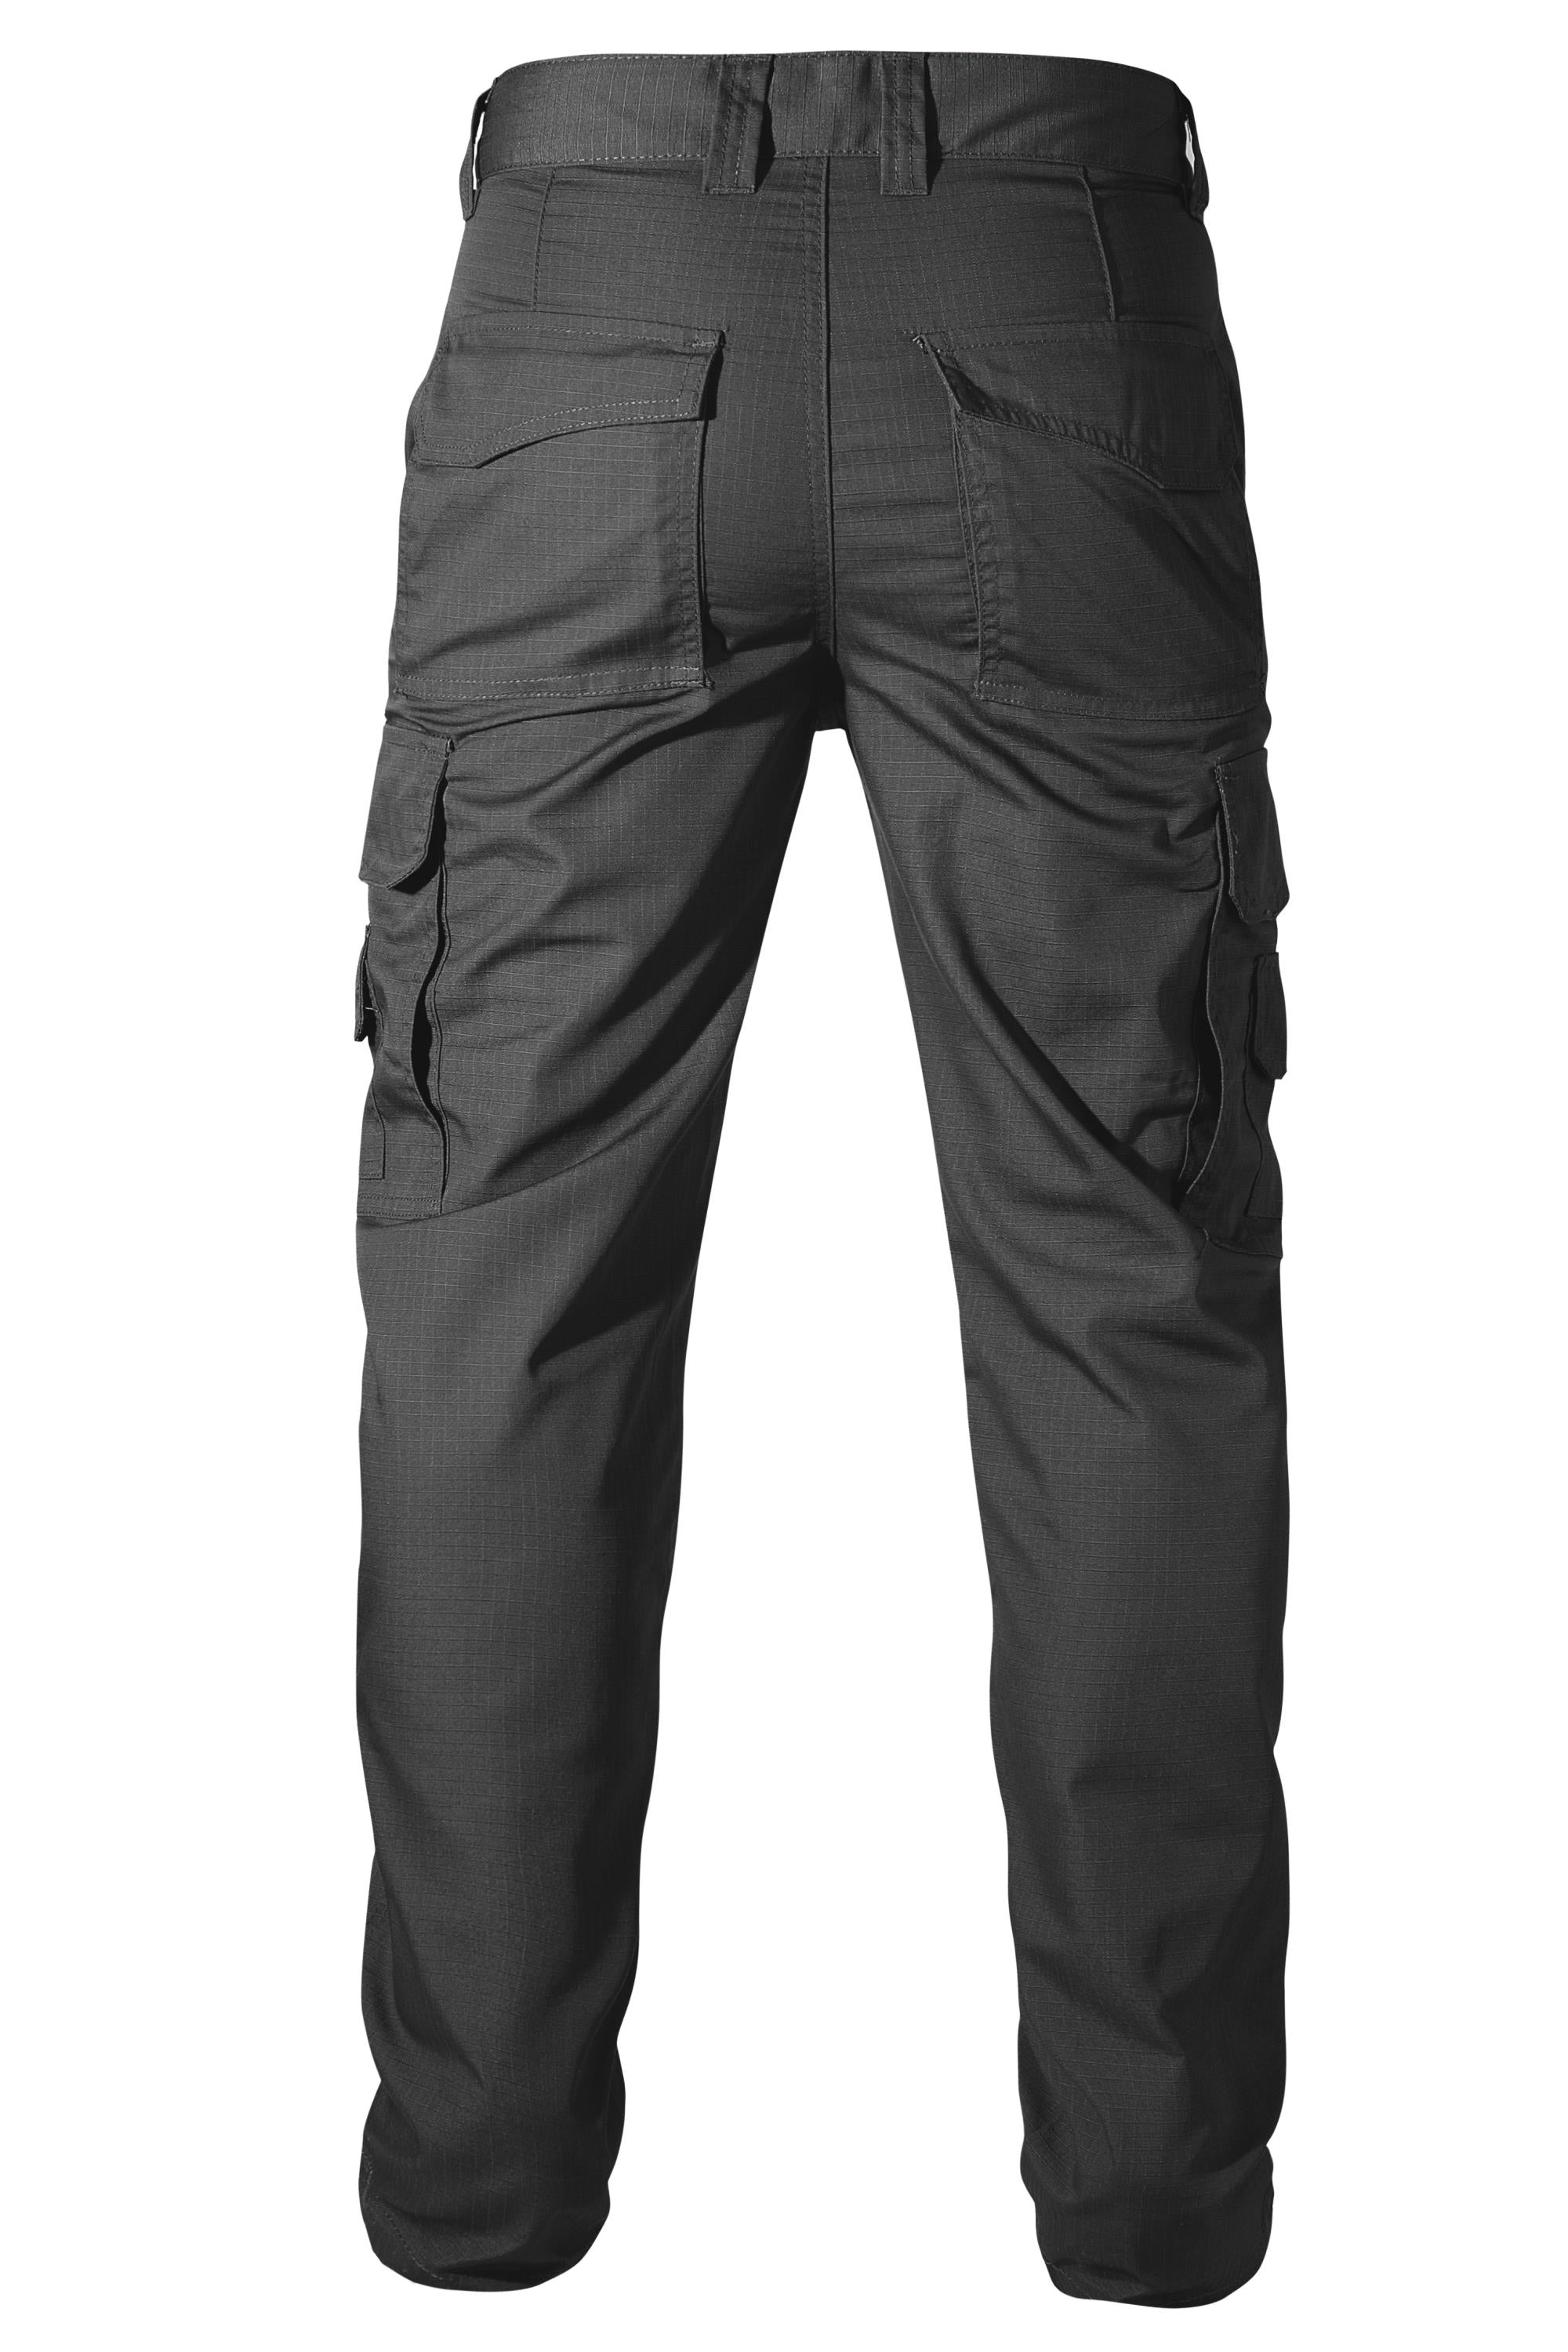 Mens Waterproof Tactical Work Trousers Cargo Pants Combat Fishing